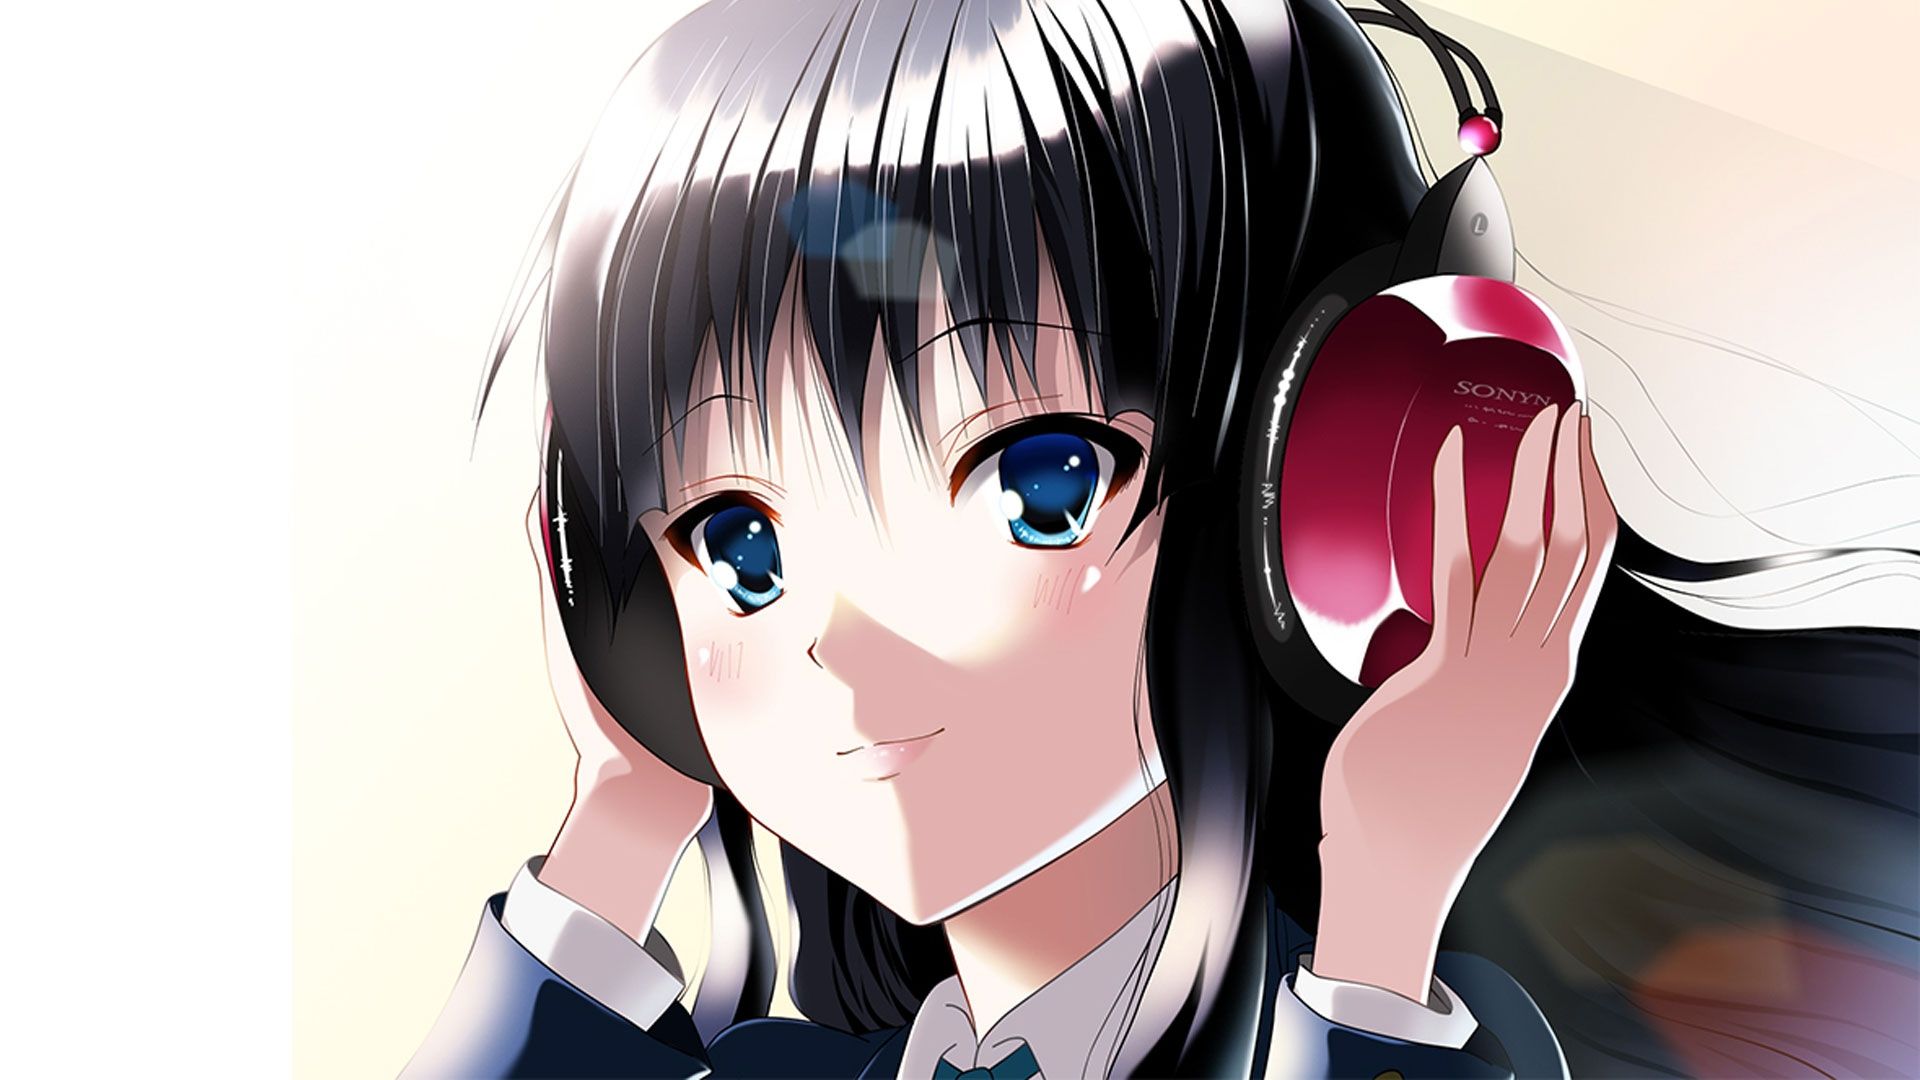 Anime Listening To Music GIFs | Tenor